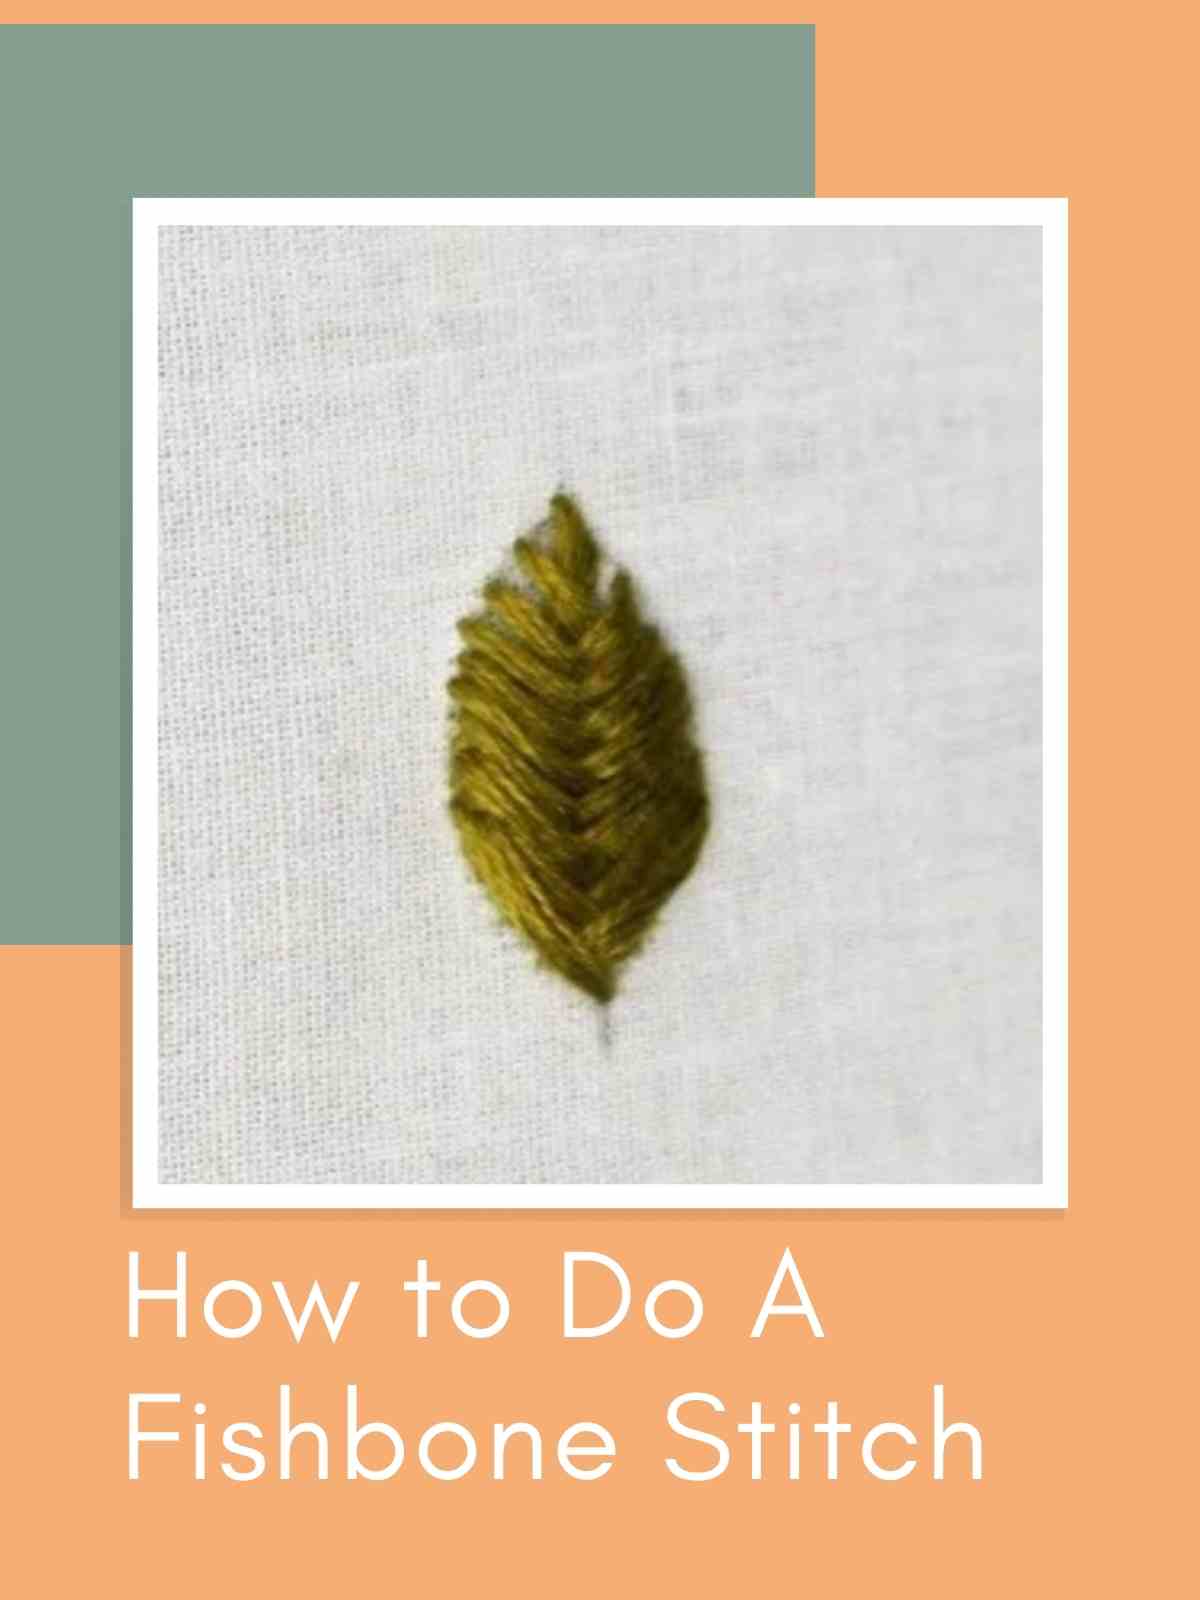 How to Do an Easy Fishbone Stitch on a leaf